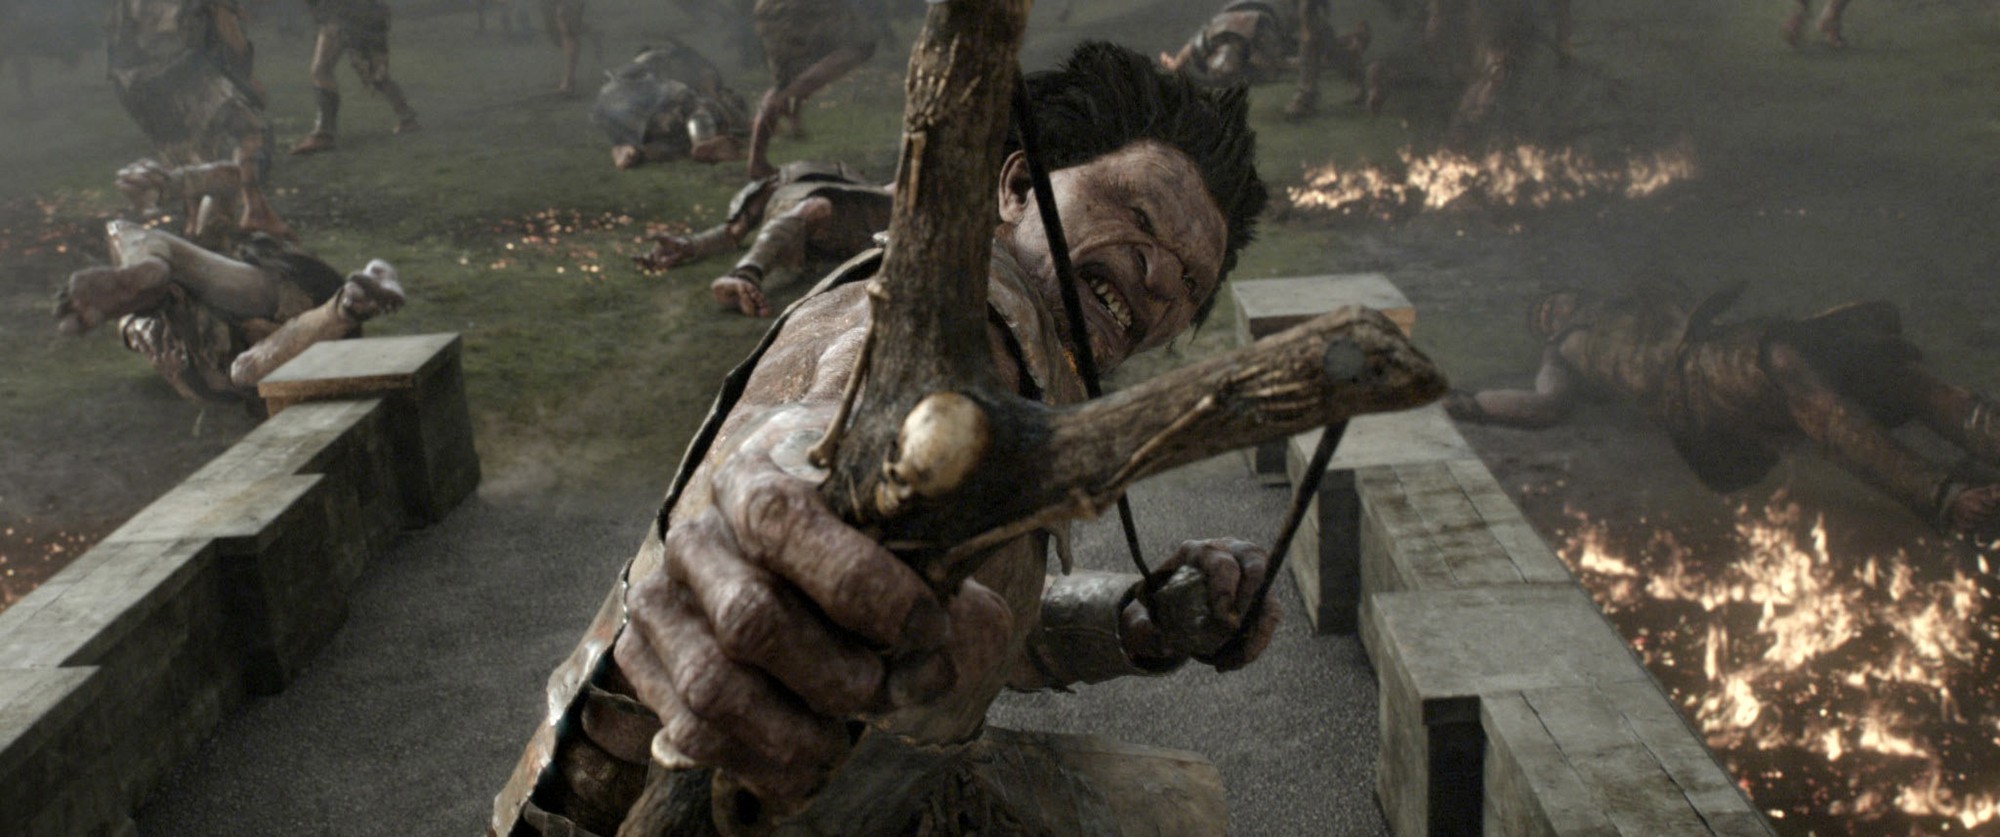 Ben Daniels stars as Fumm in Warner Bros. Pictures' Jack the Giant Slayer (2013)